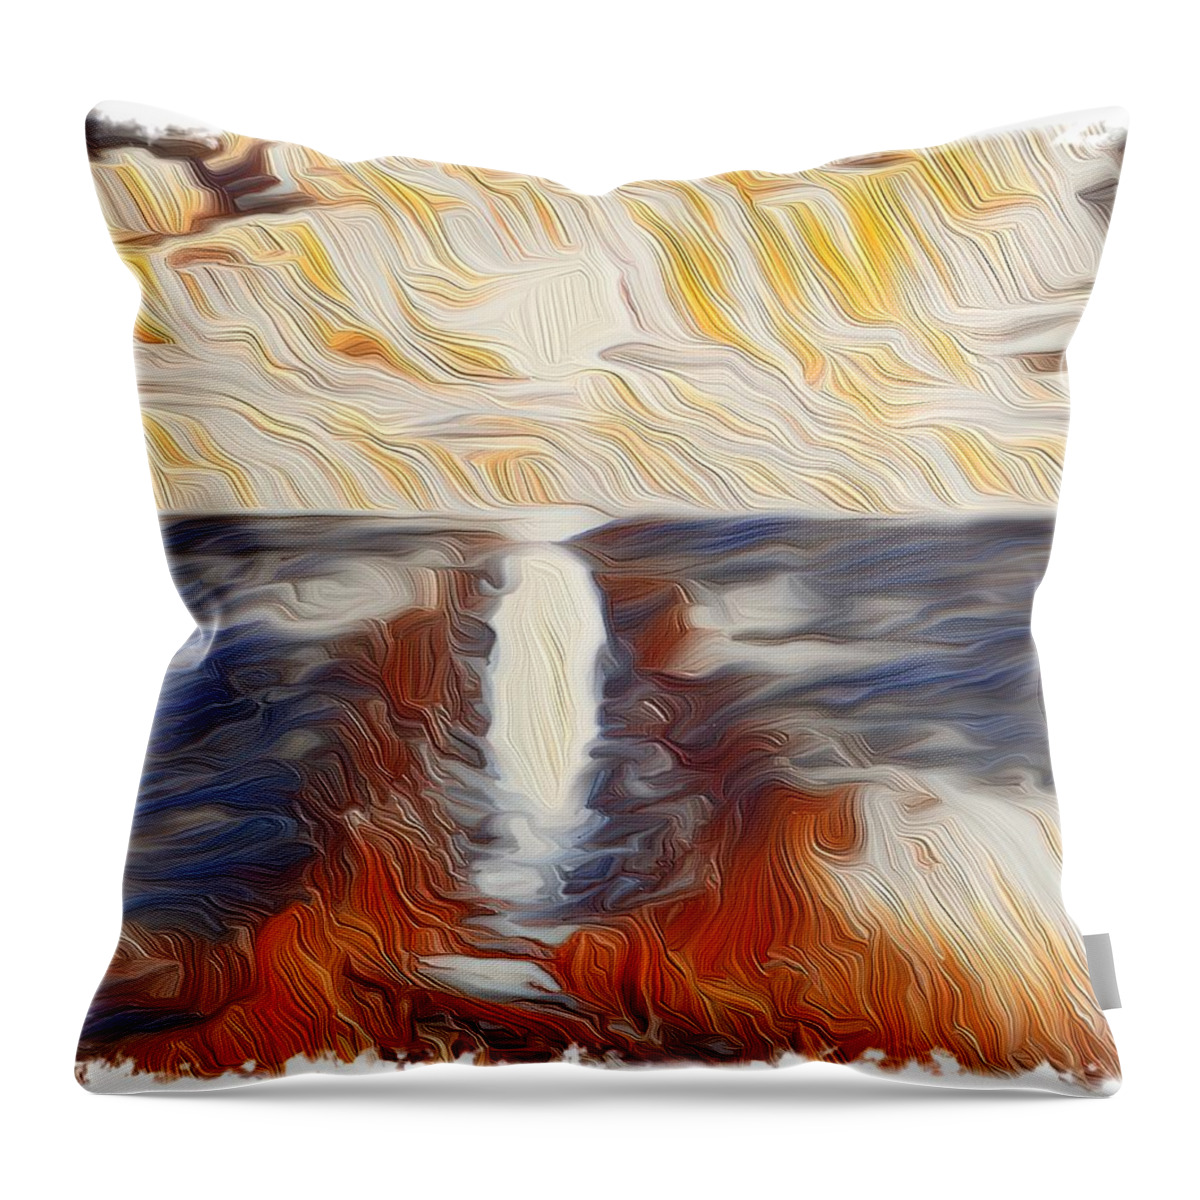  Throw Pillow featuring the mixed media Japanese Beach by Bencasso Barnesquiat